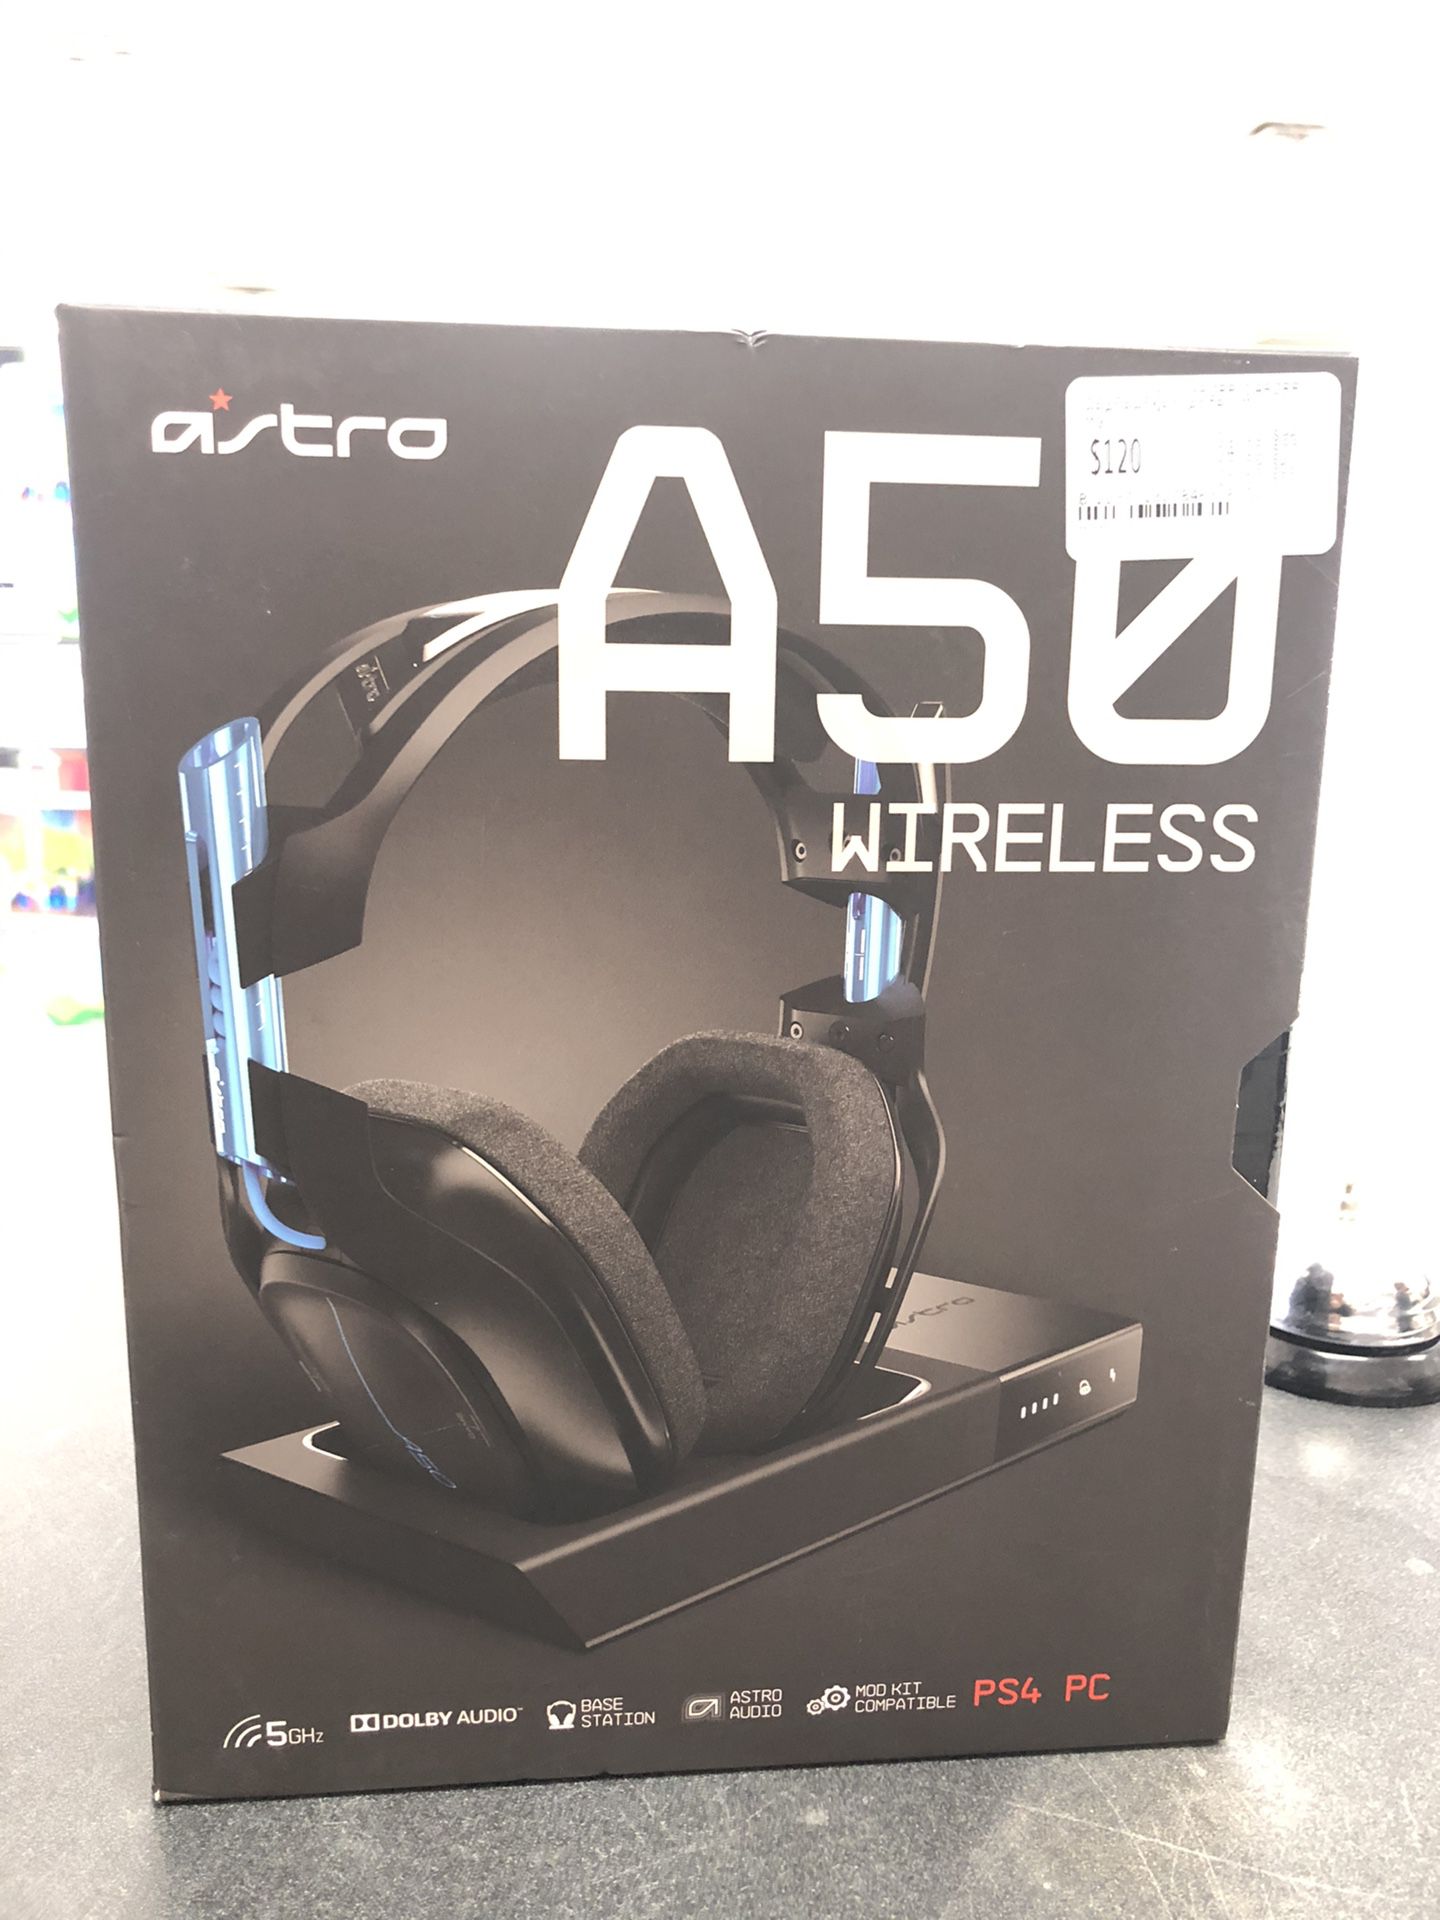 Astro gaming headphones $120